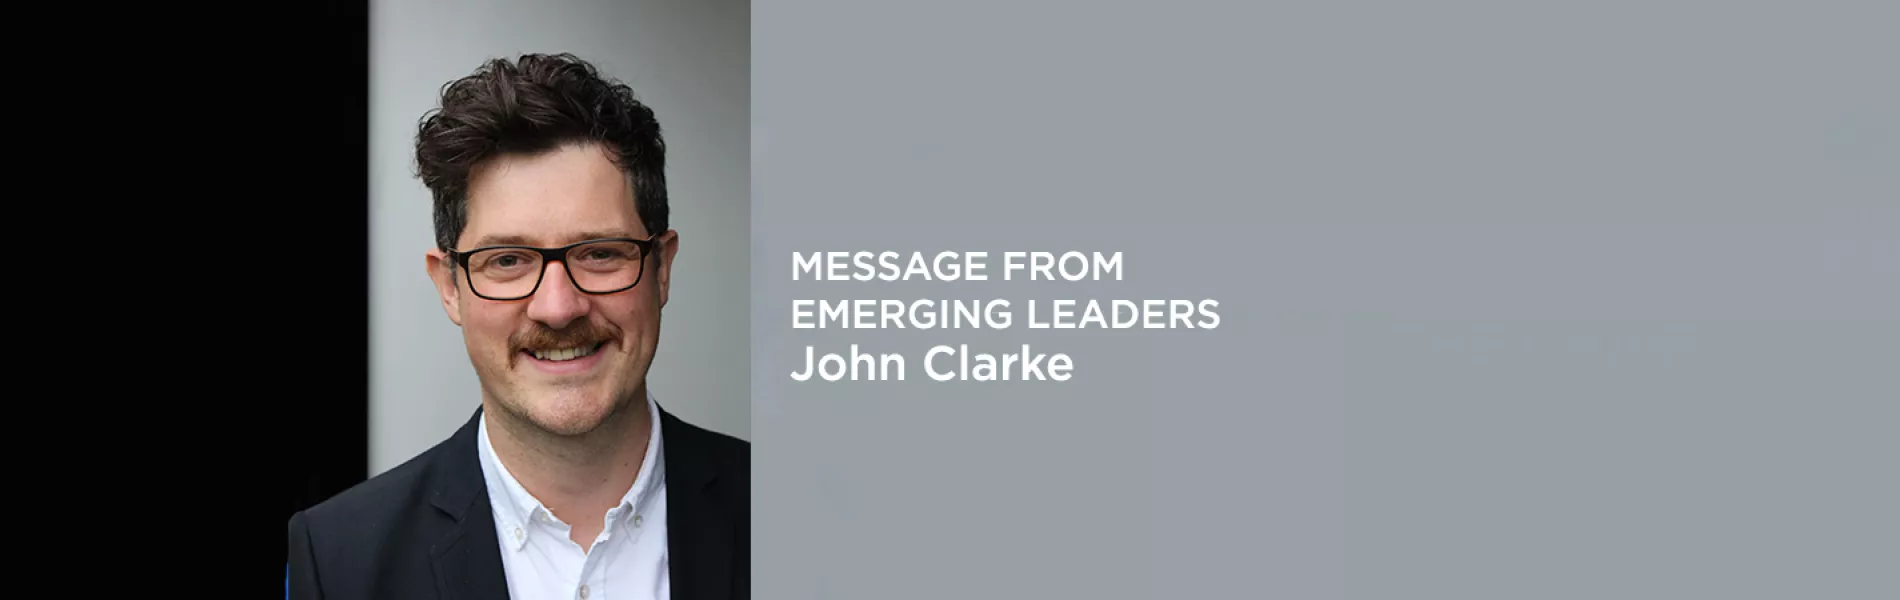 Emerging Leaders Editorial: John Clarke